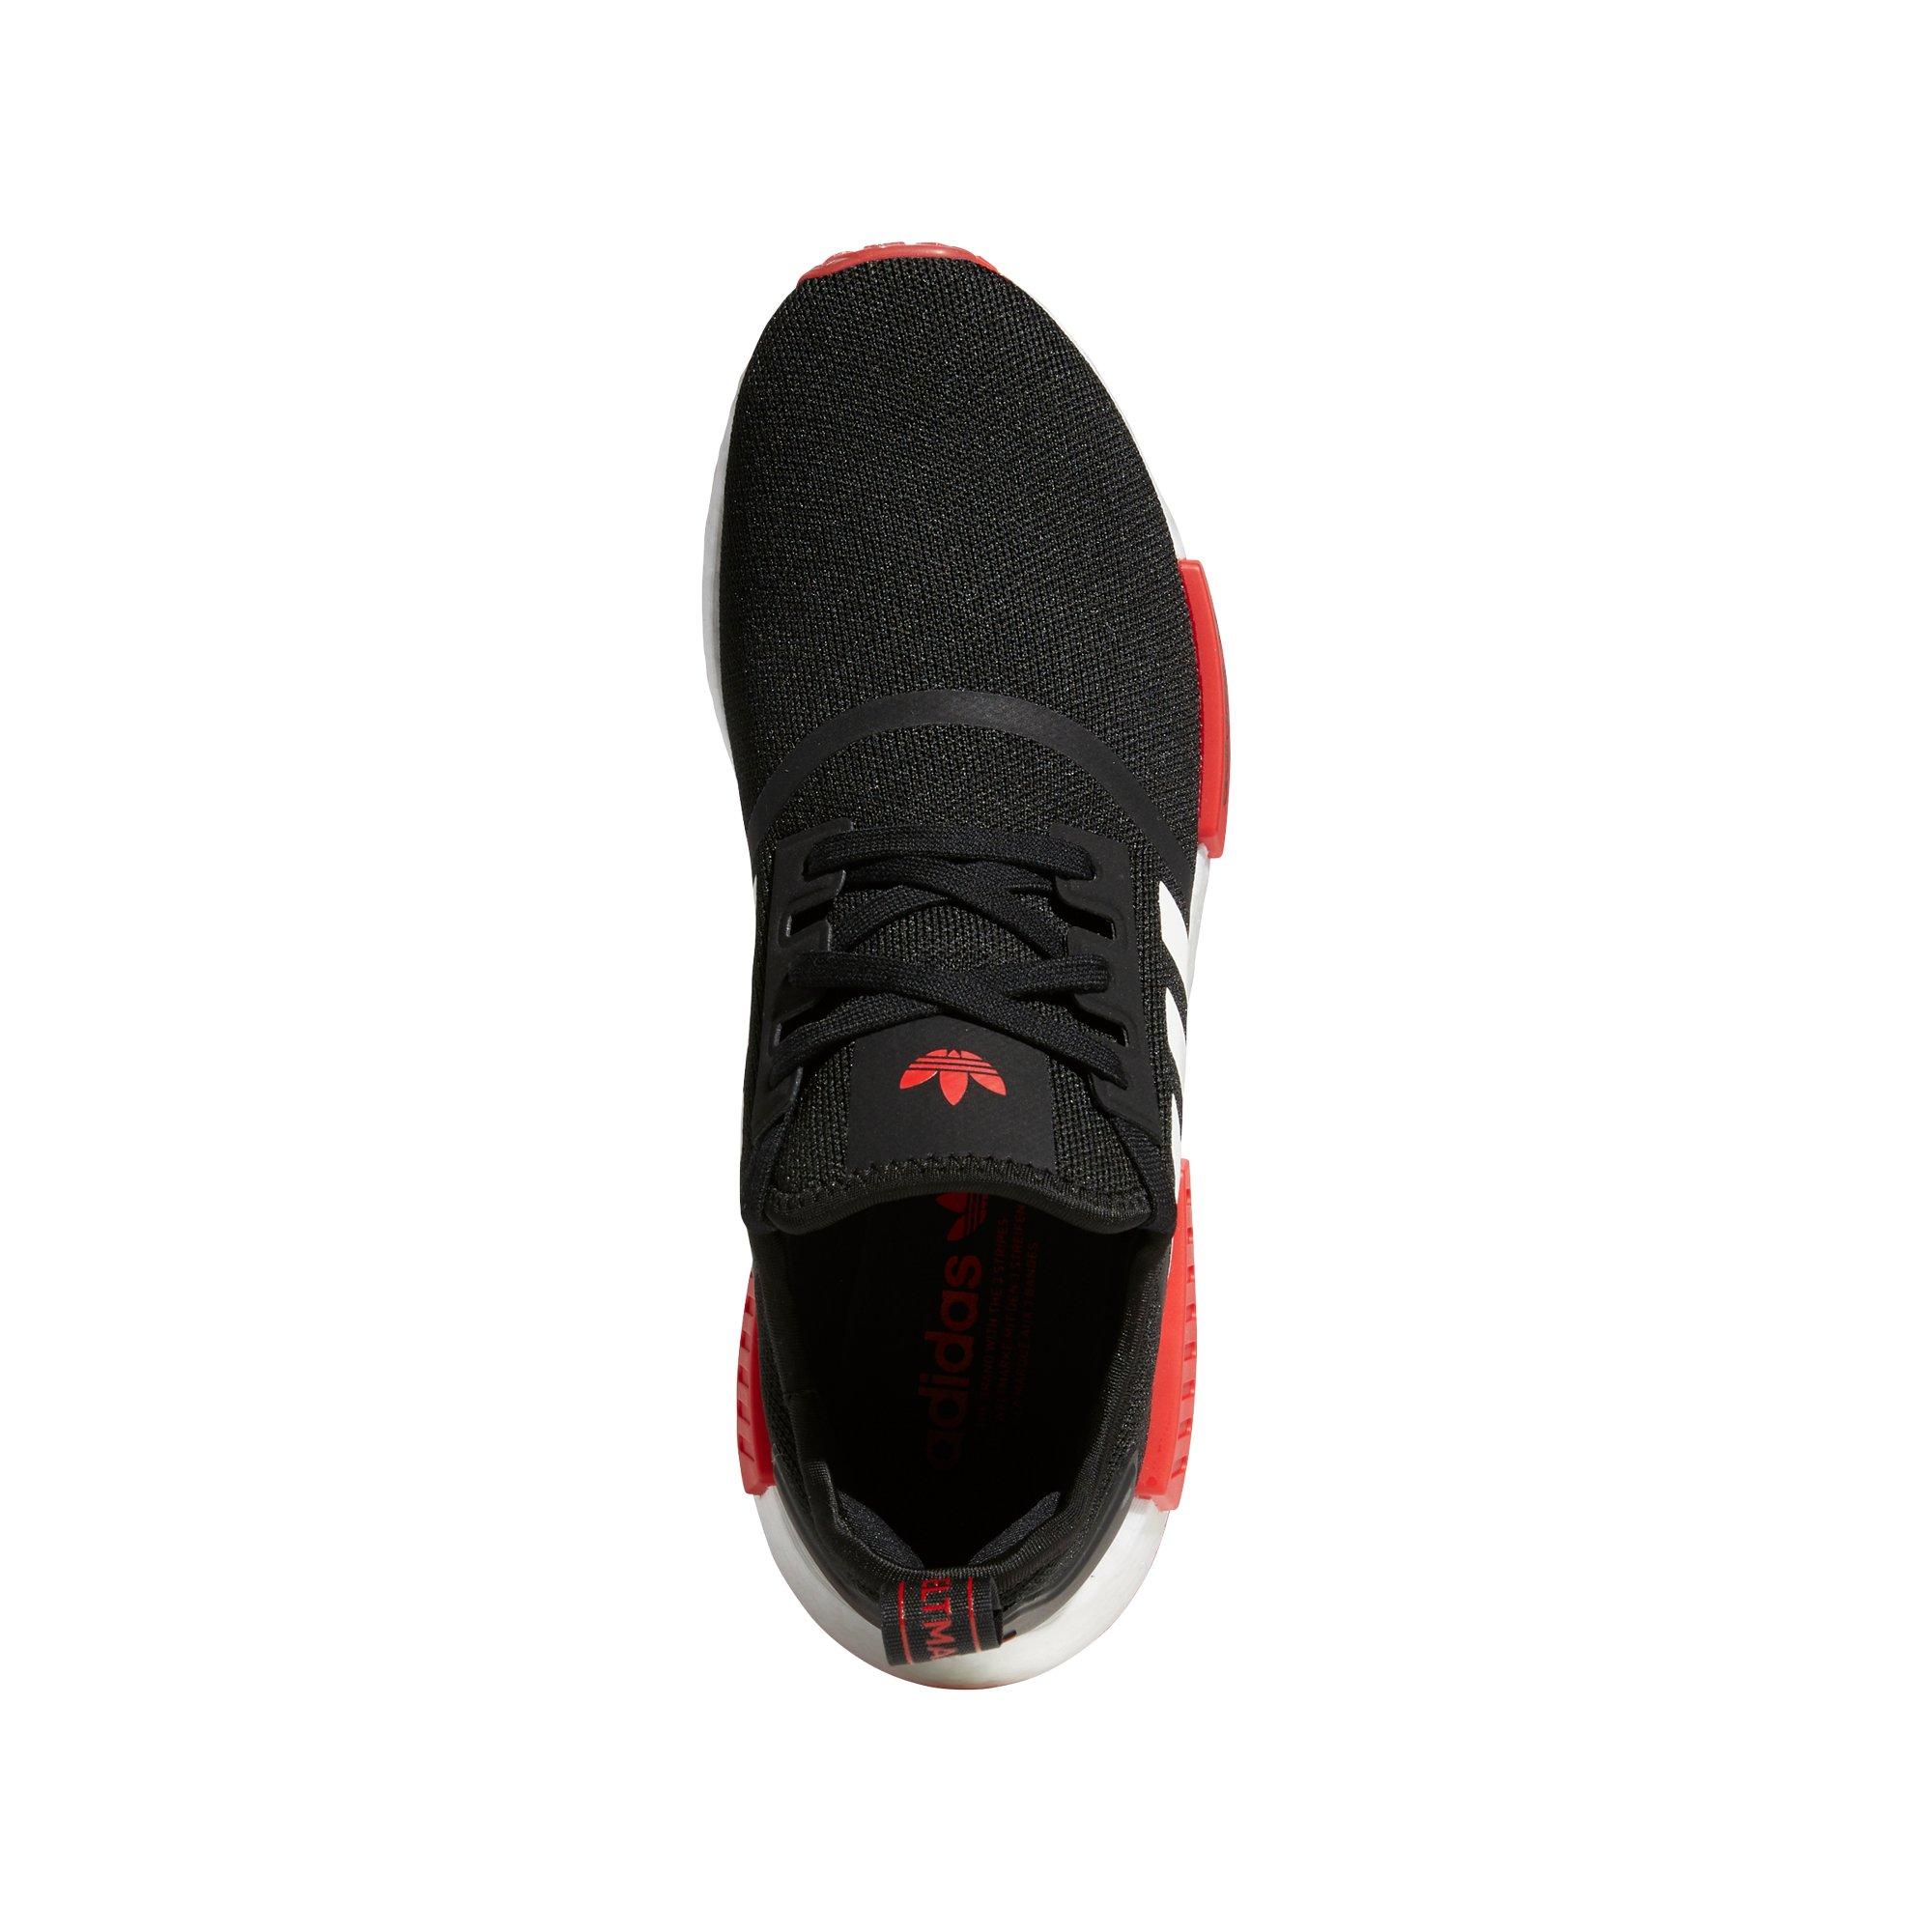 adidas NMD_R1 "Core Black/Ftwr White/Vivid Red" Men's Running